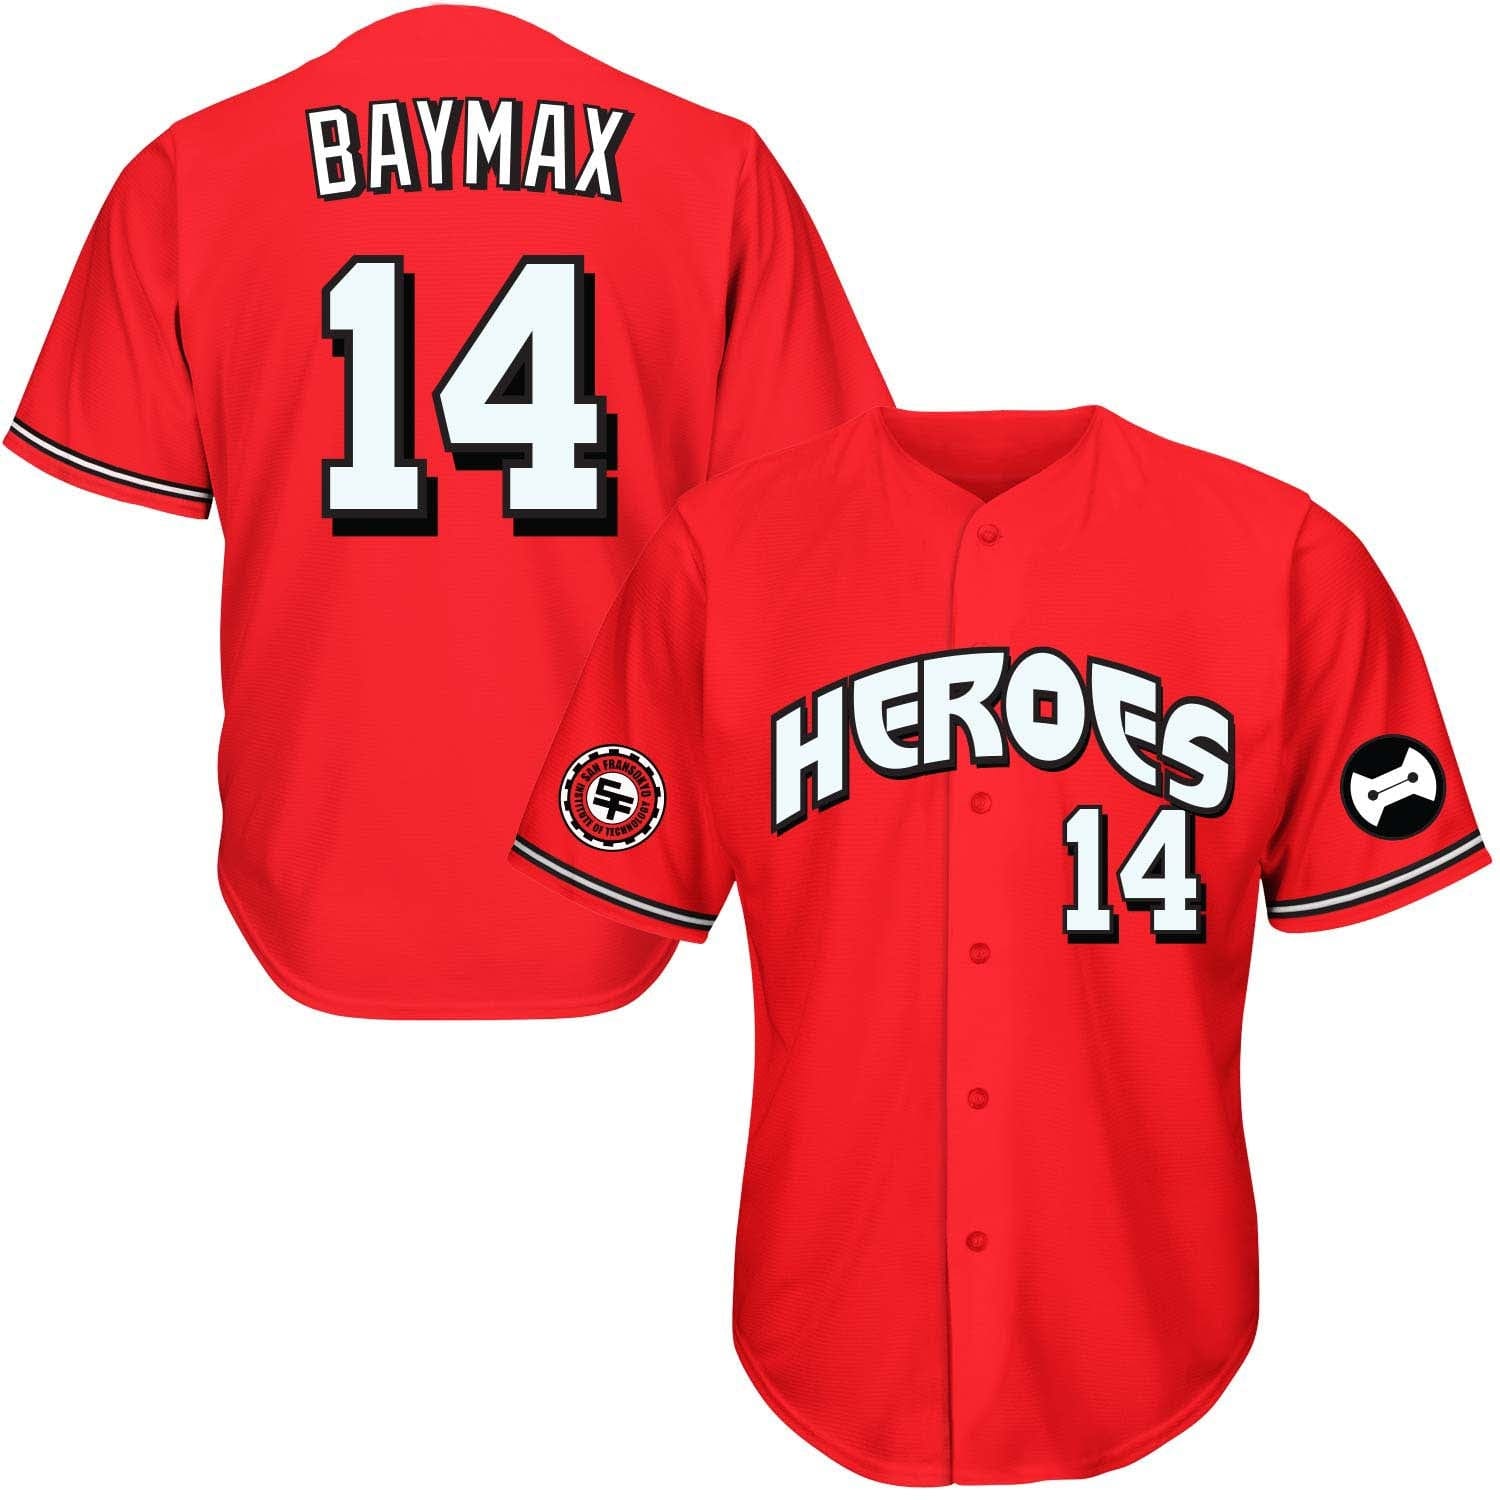 Heroes Baymax Baseball Jersey – Park Friends